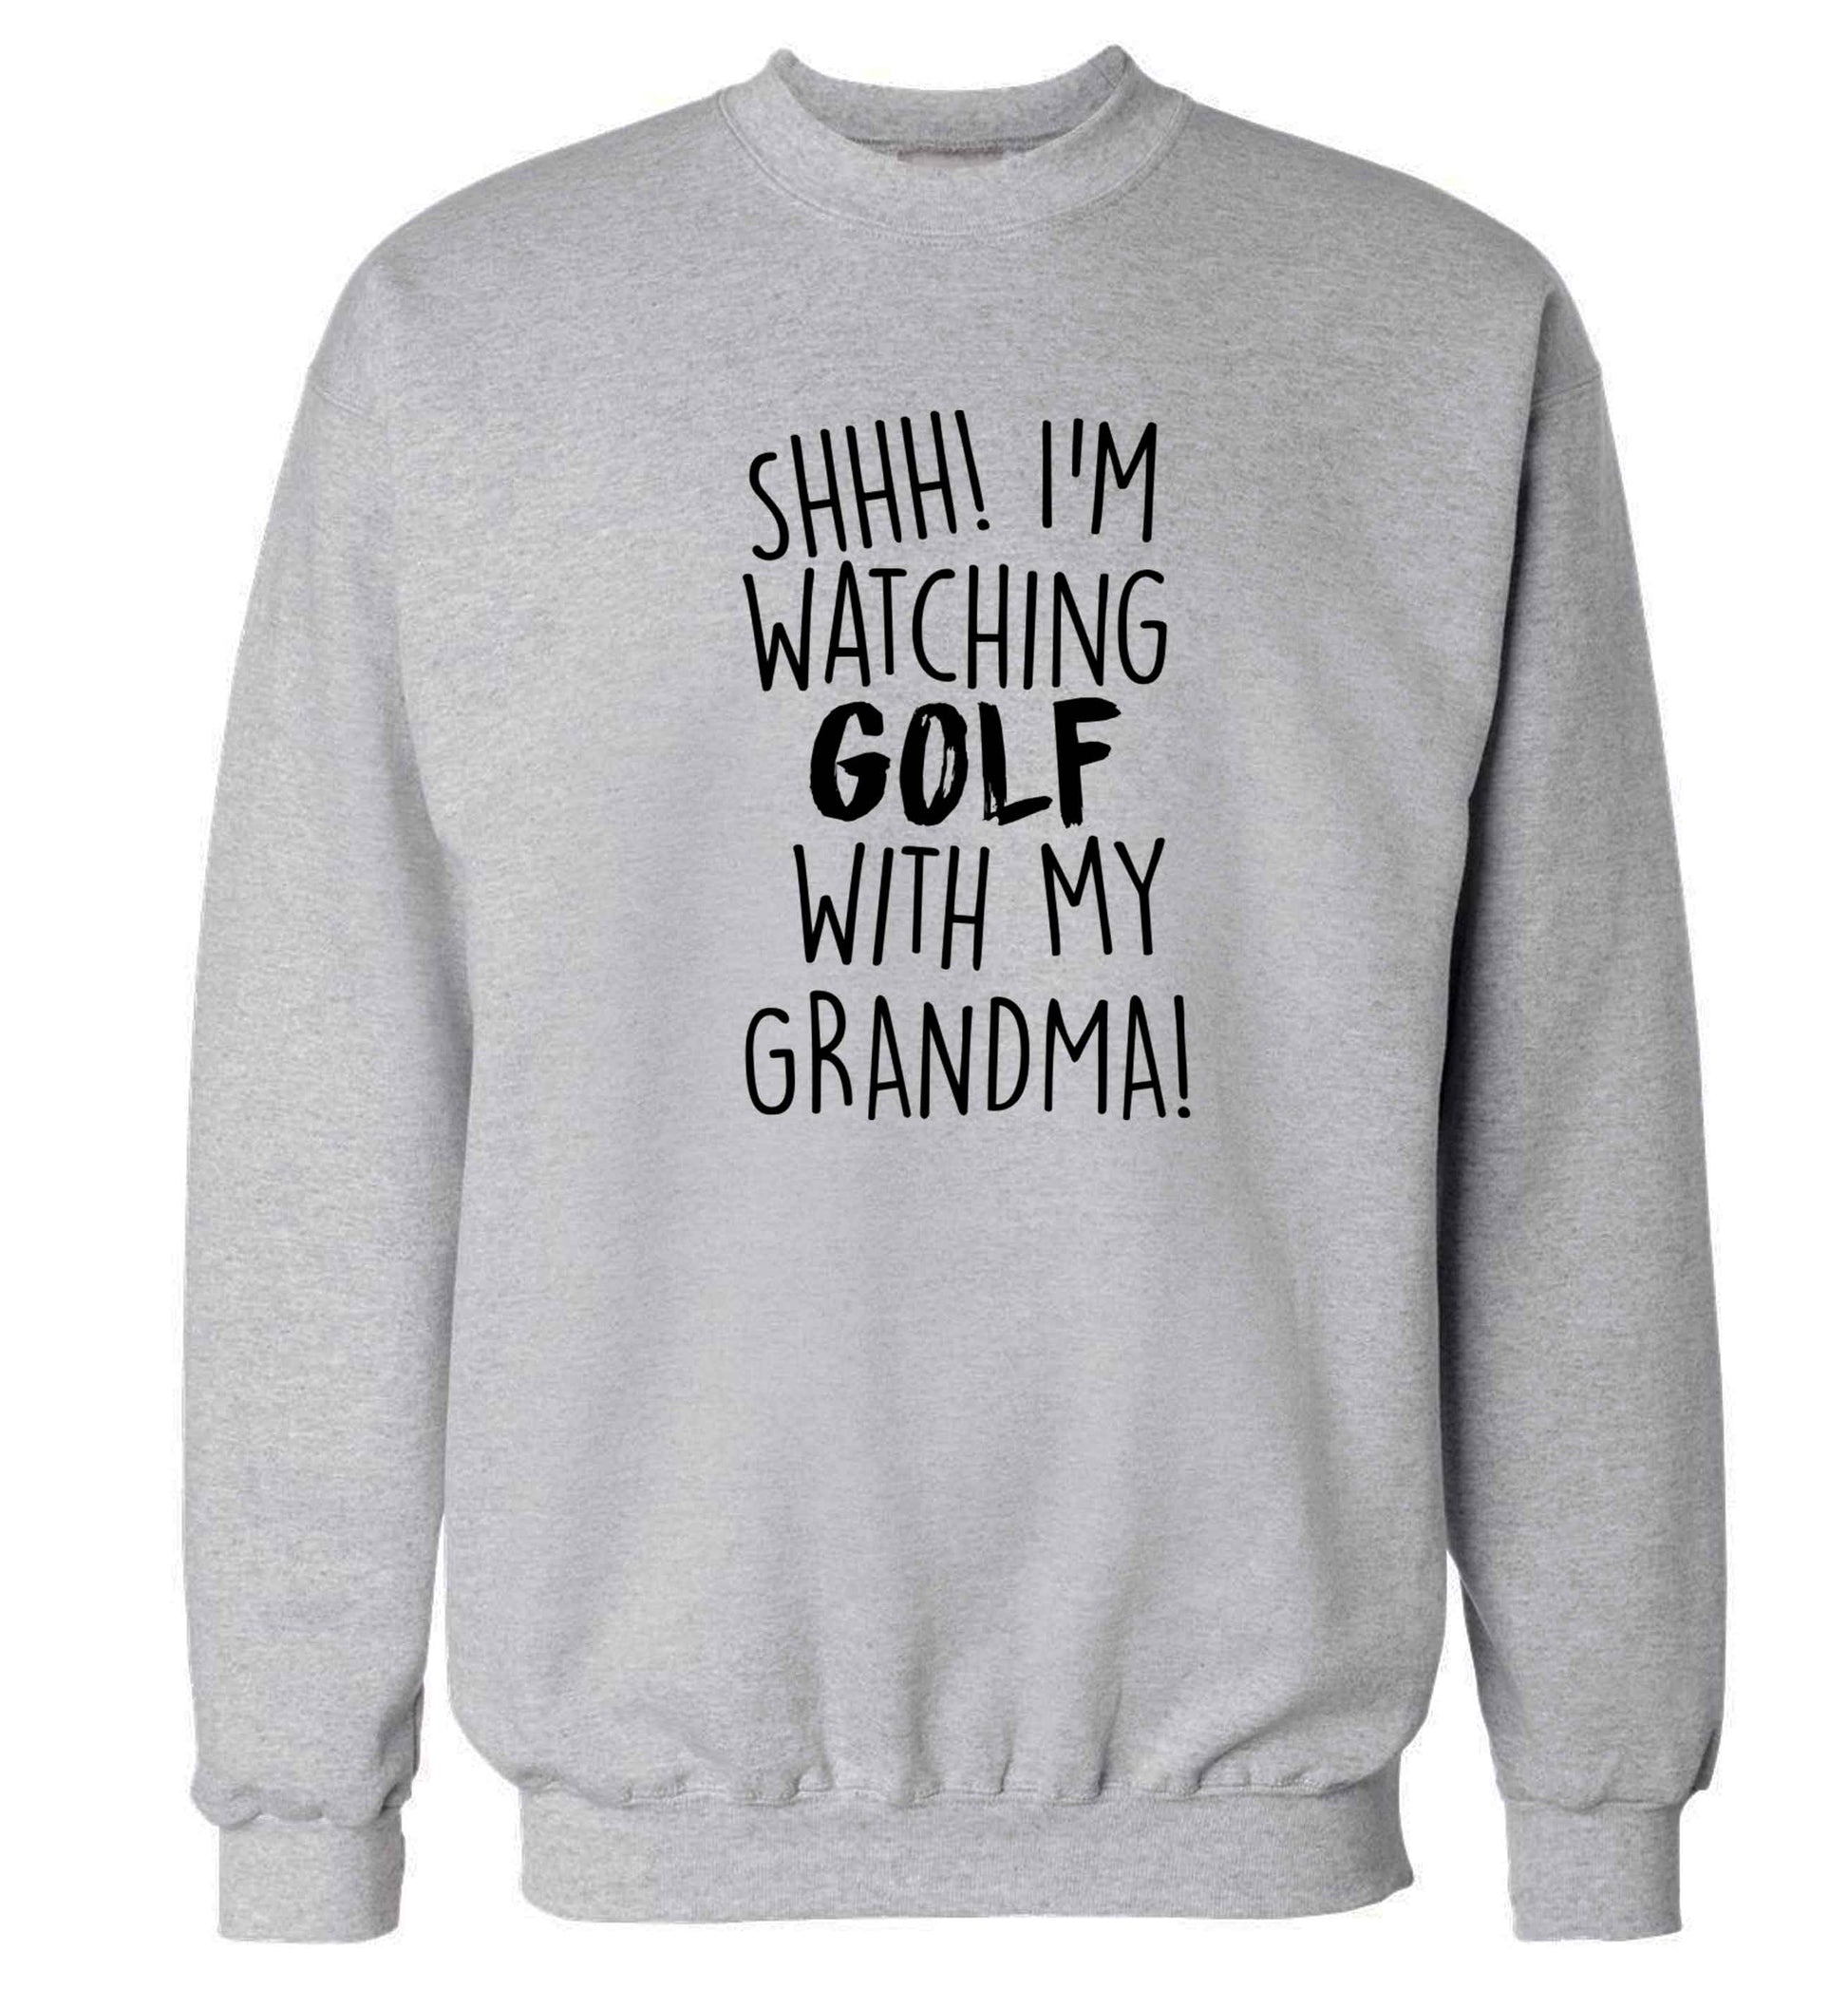 Shh I'm watching golf with my grandma Adult's unisex grey Sweater 2XL